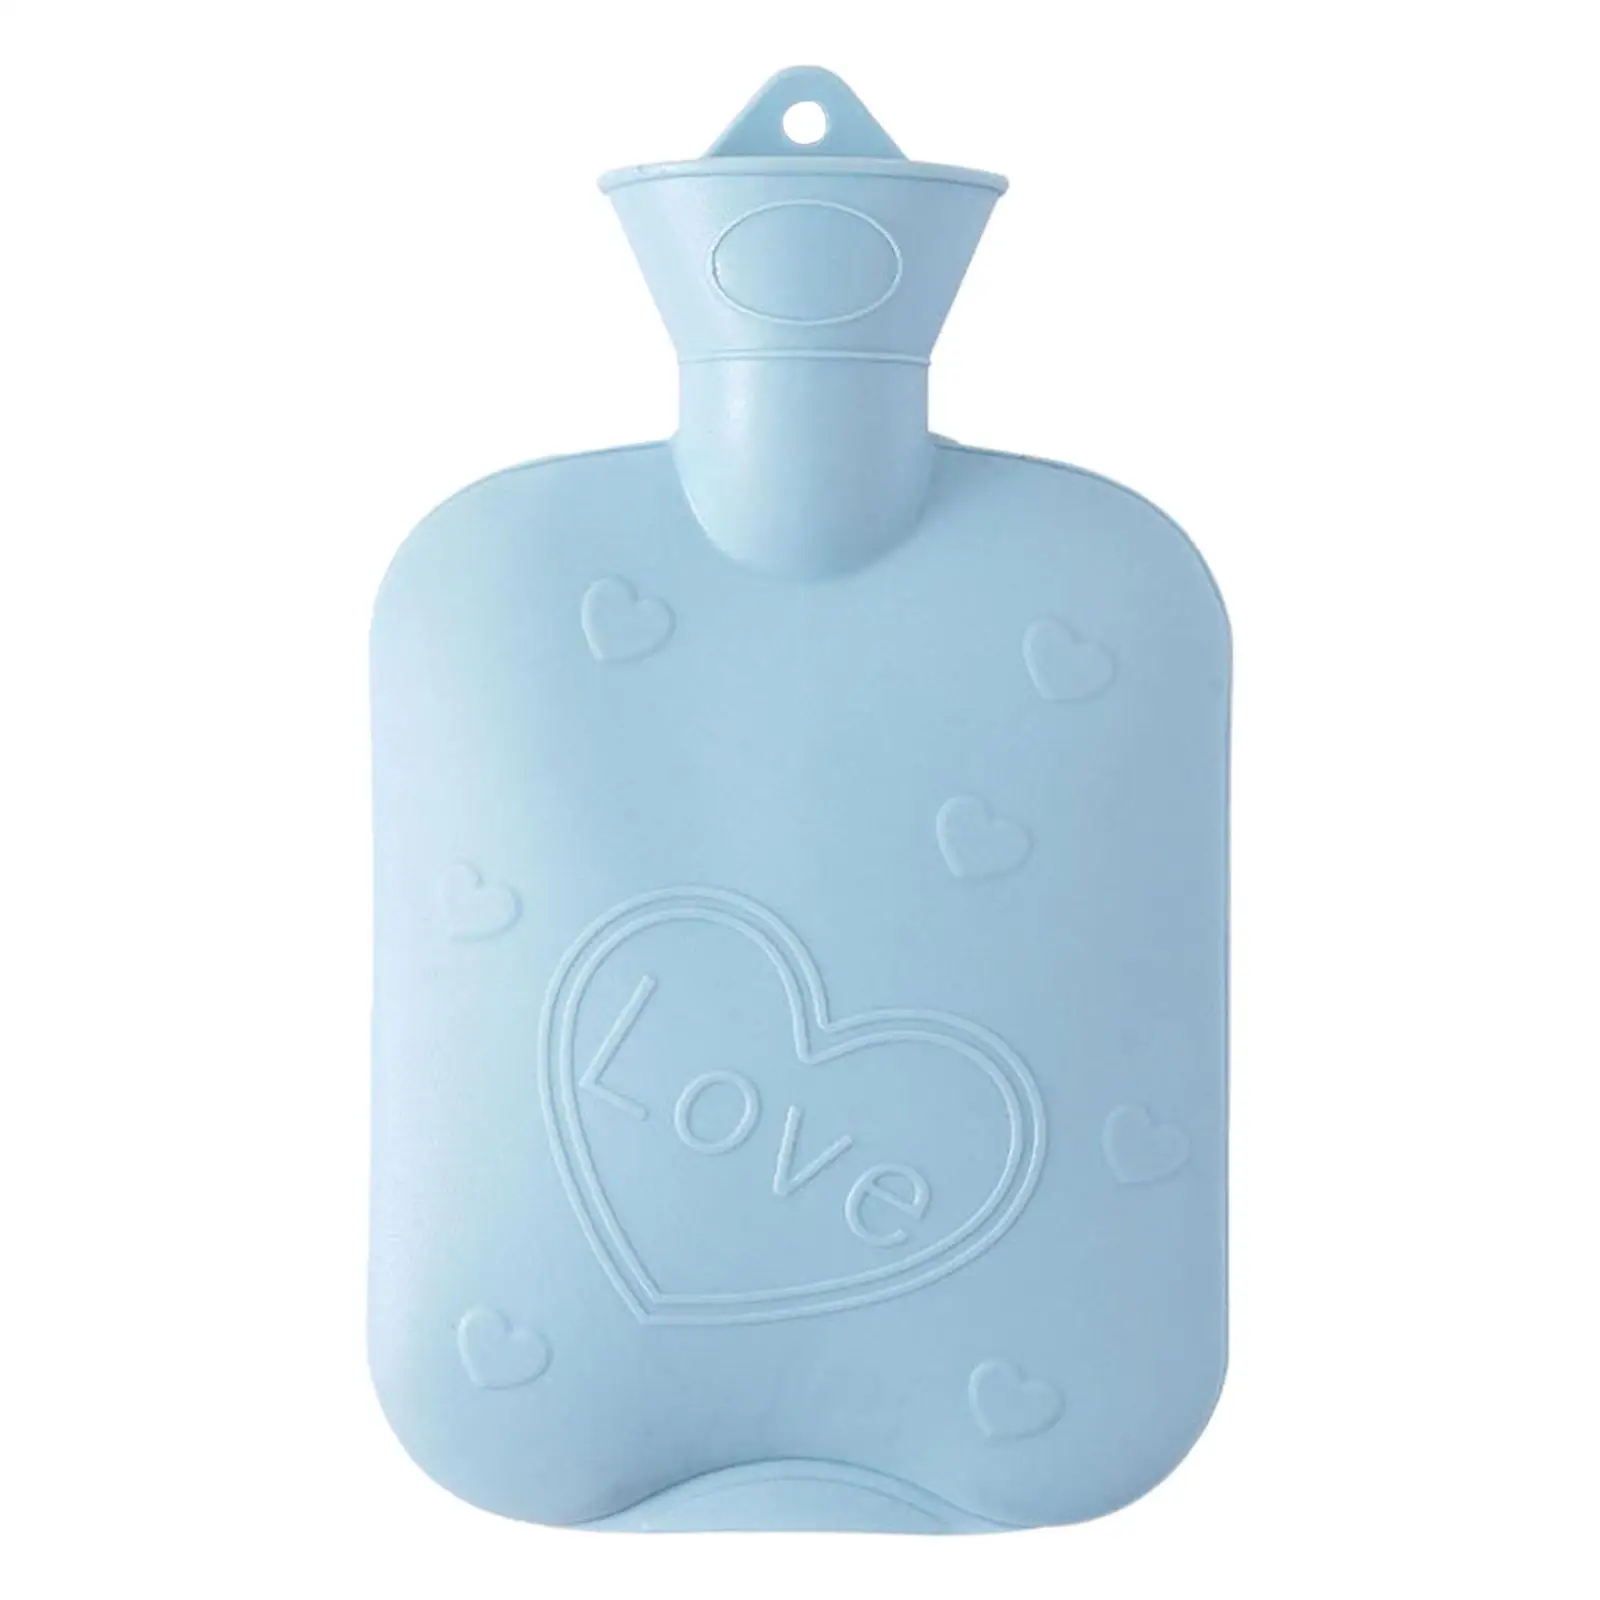 PVC hot water bottle, hand warmer, ml bag, hot water filling bag, great gift